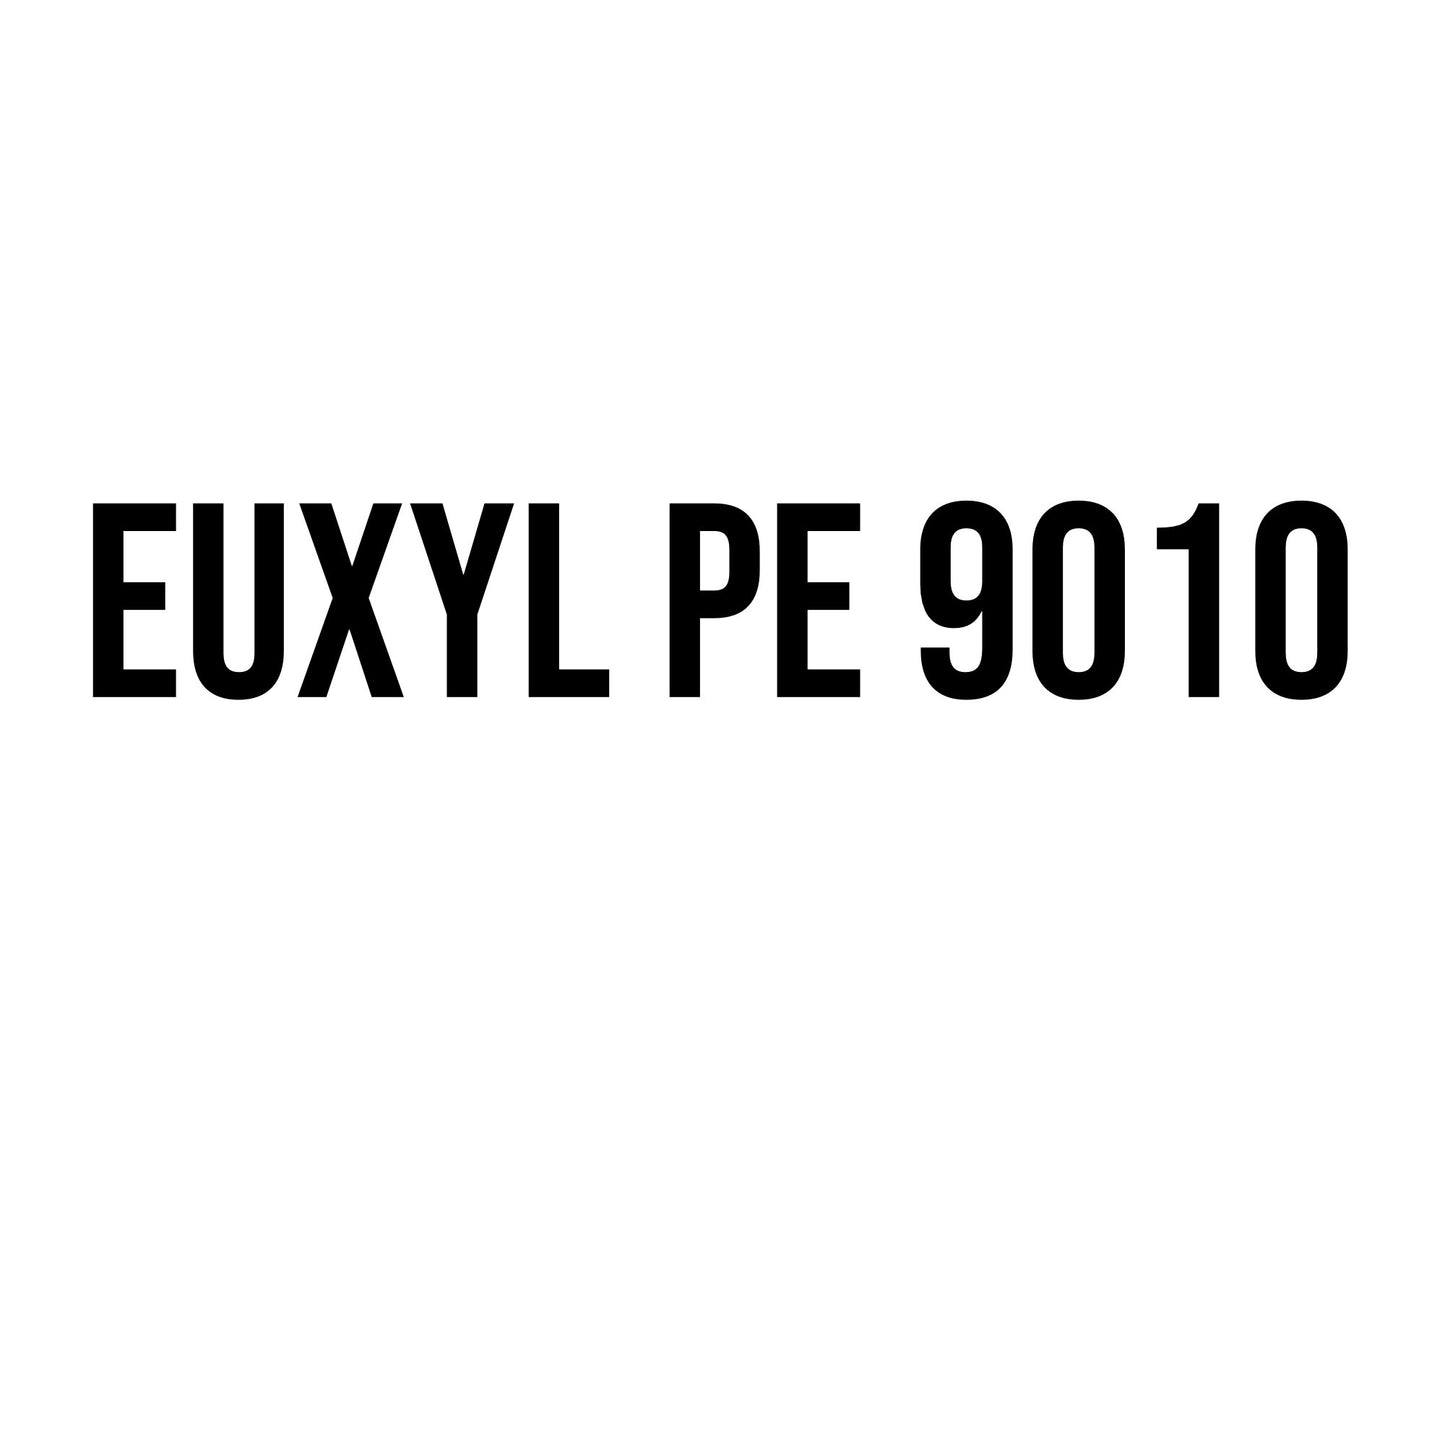 Euxyl PE 9010